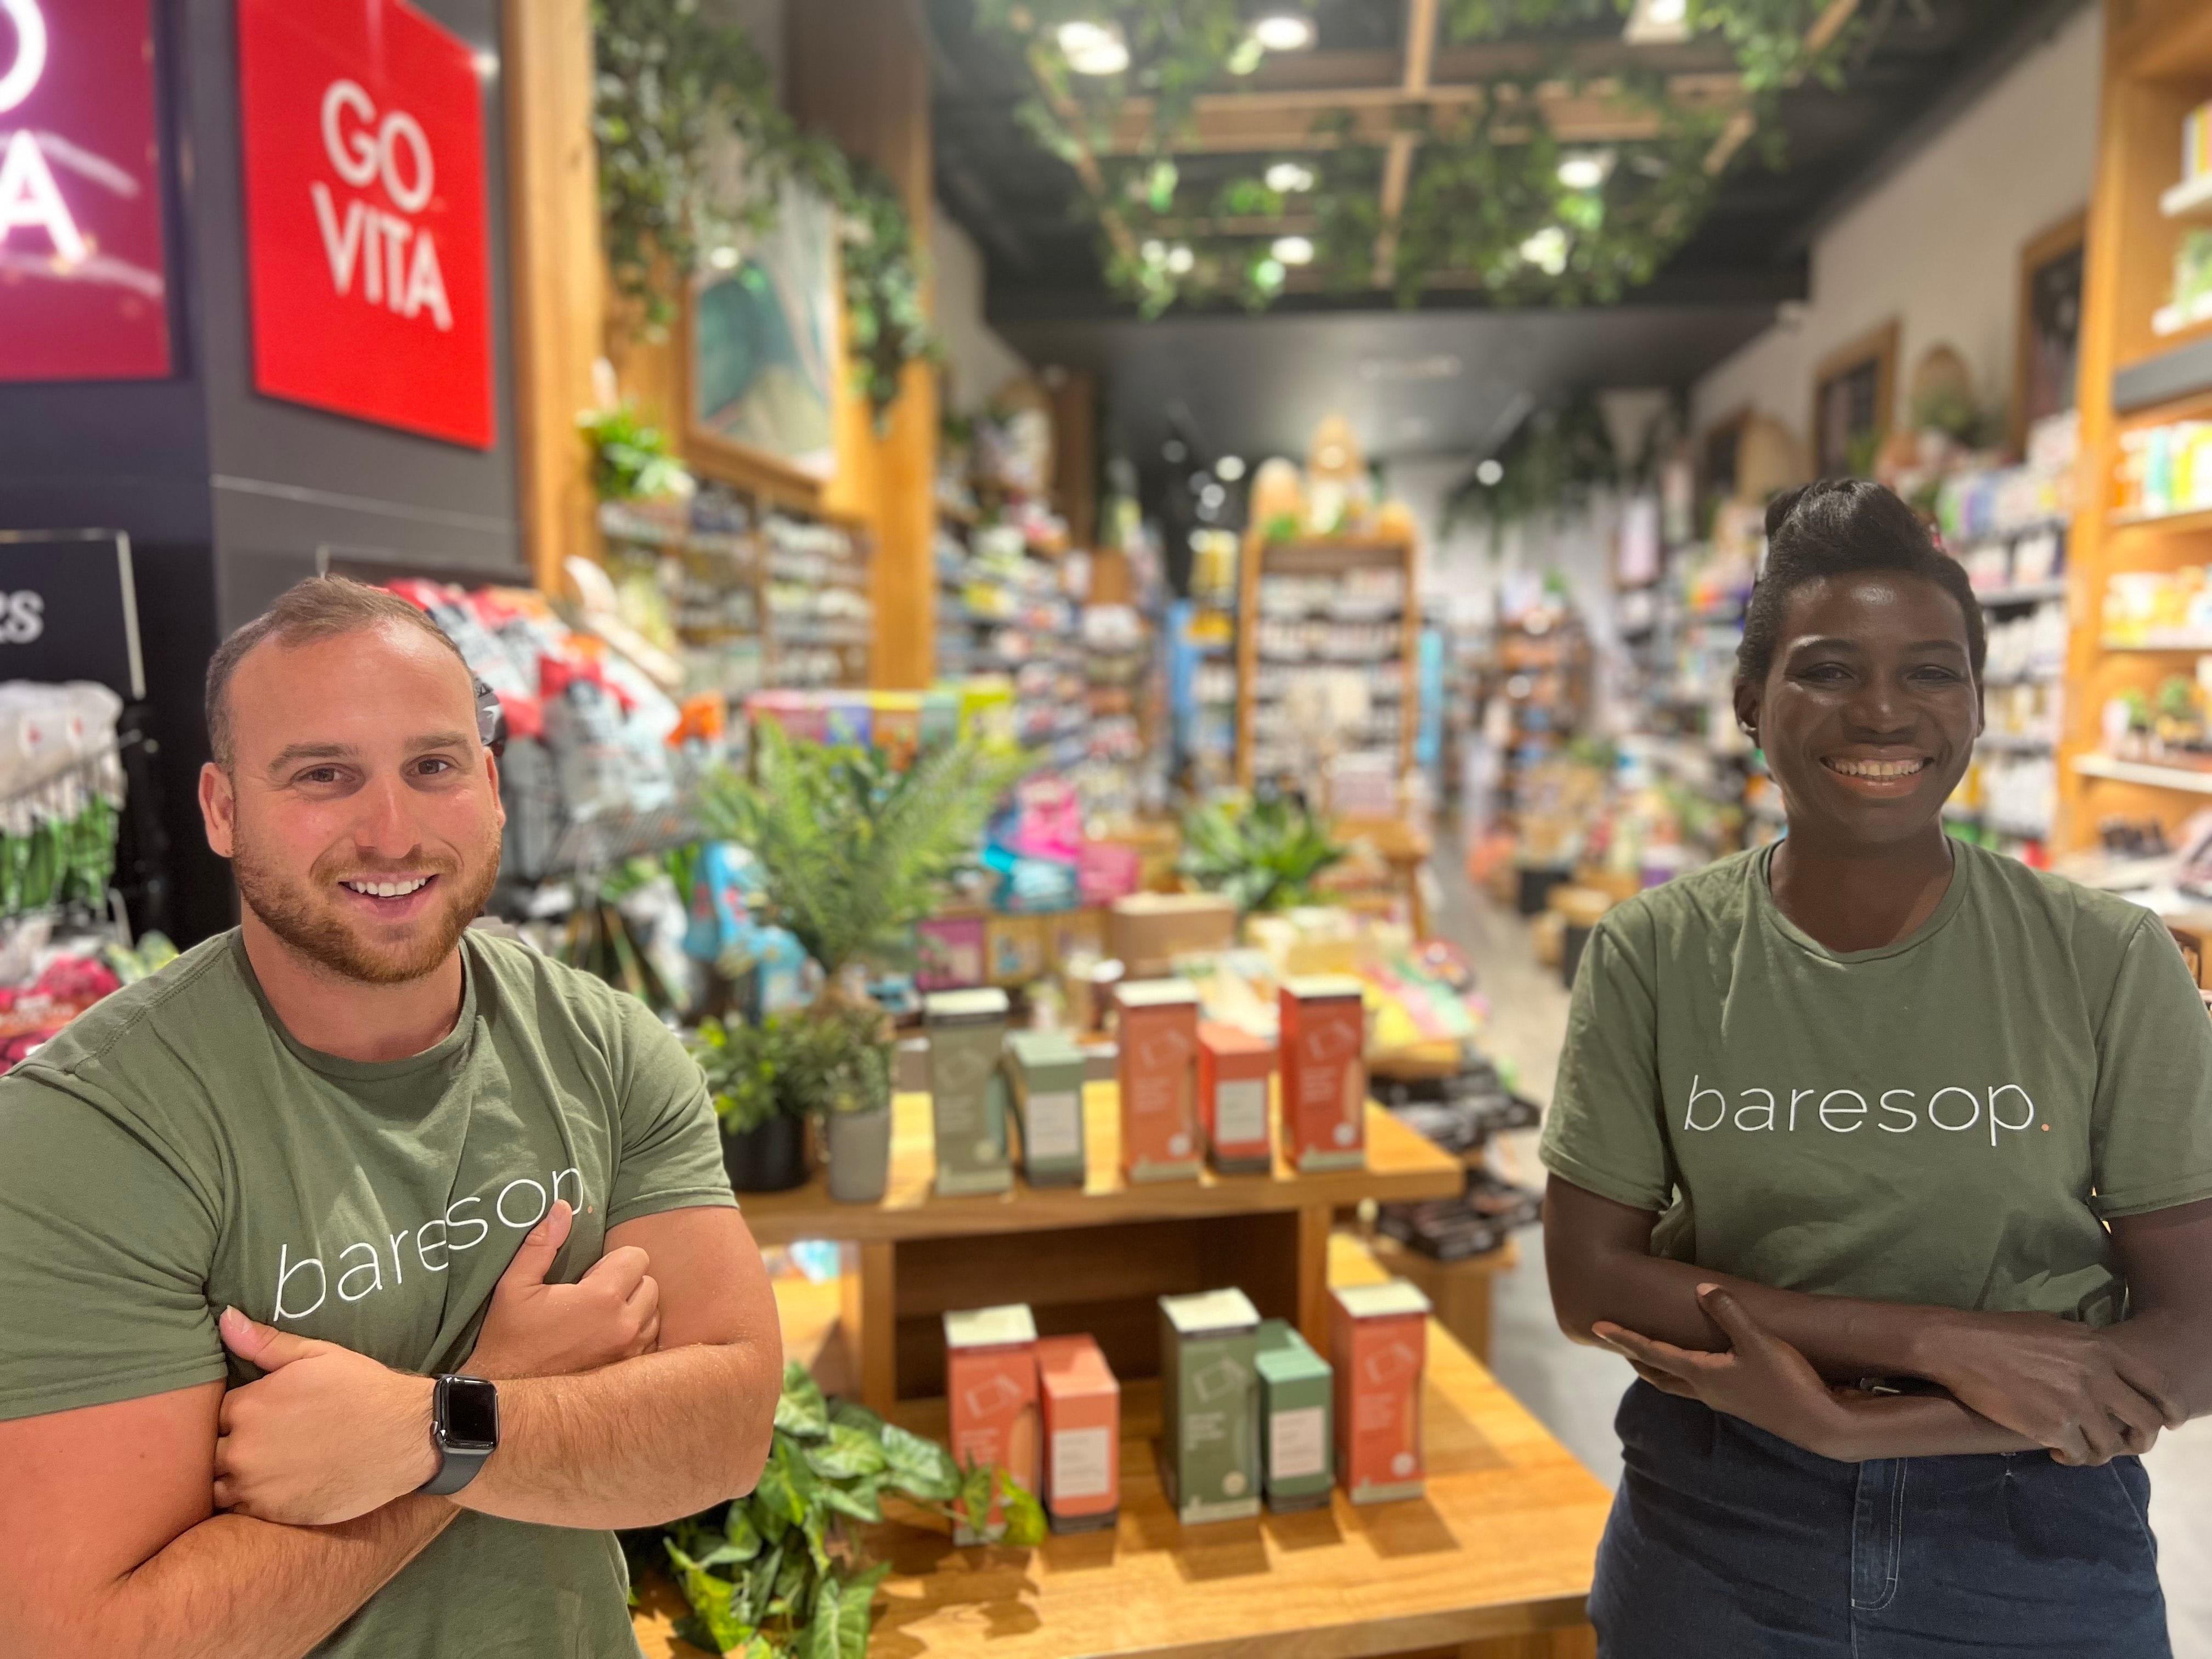 Sustainable hygiene brand Baresop lands national distribution deal with Go Vita